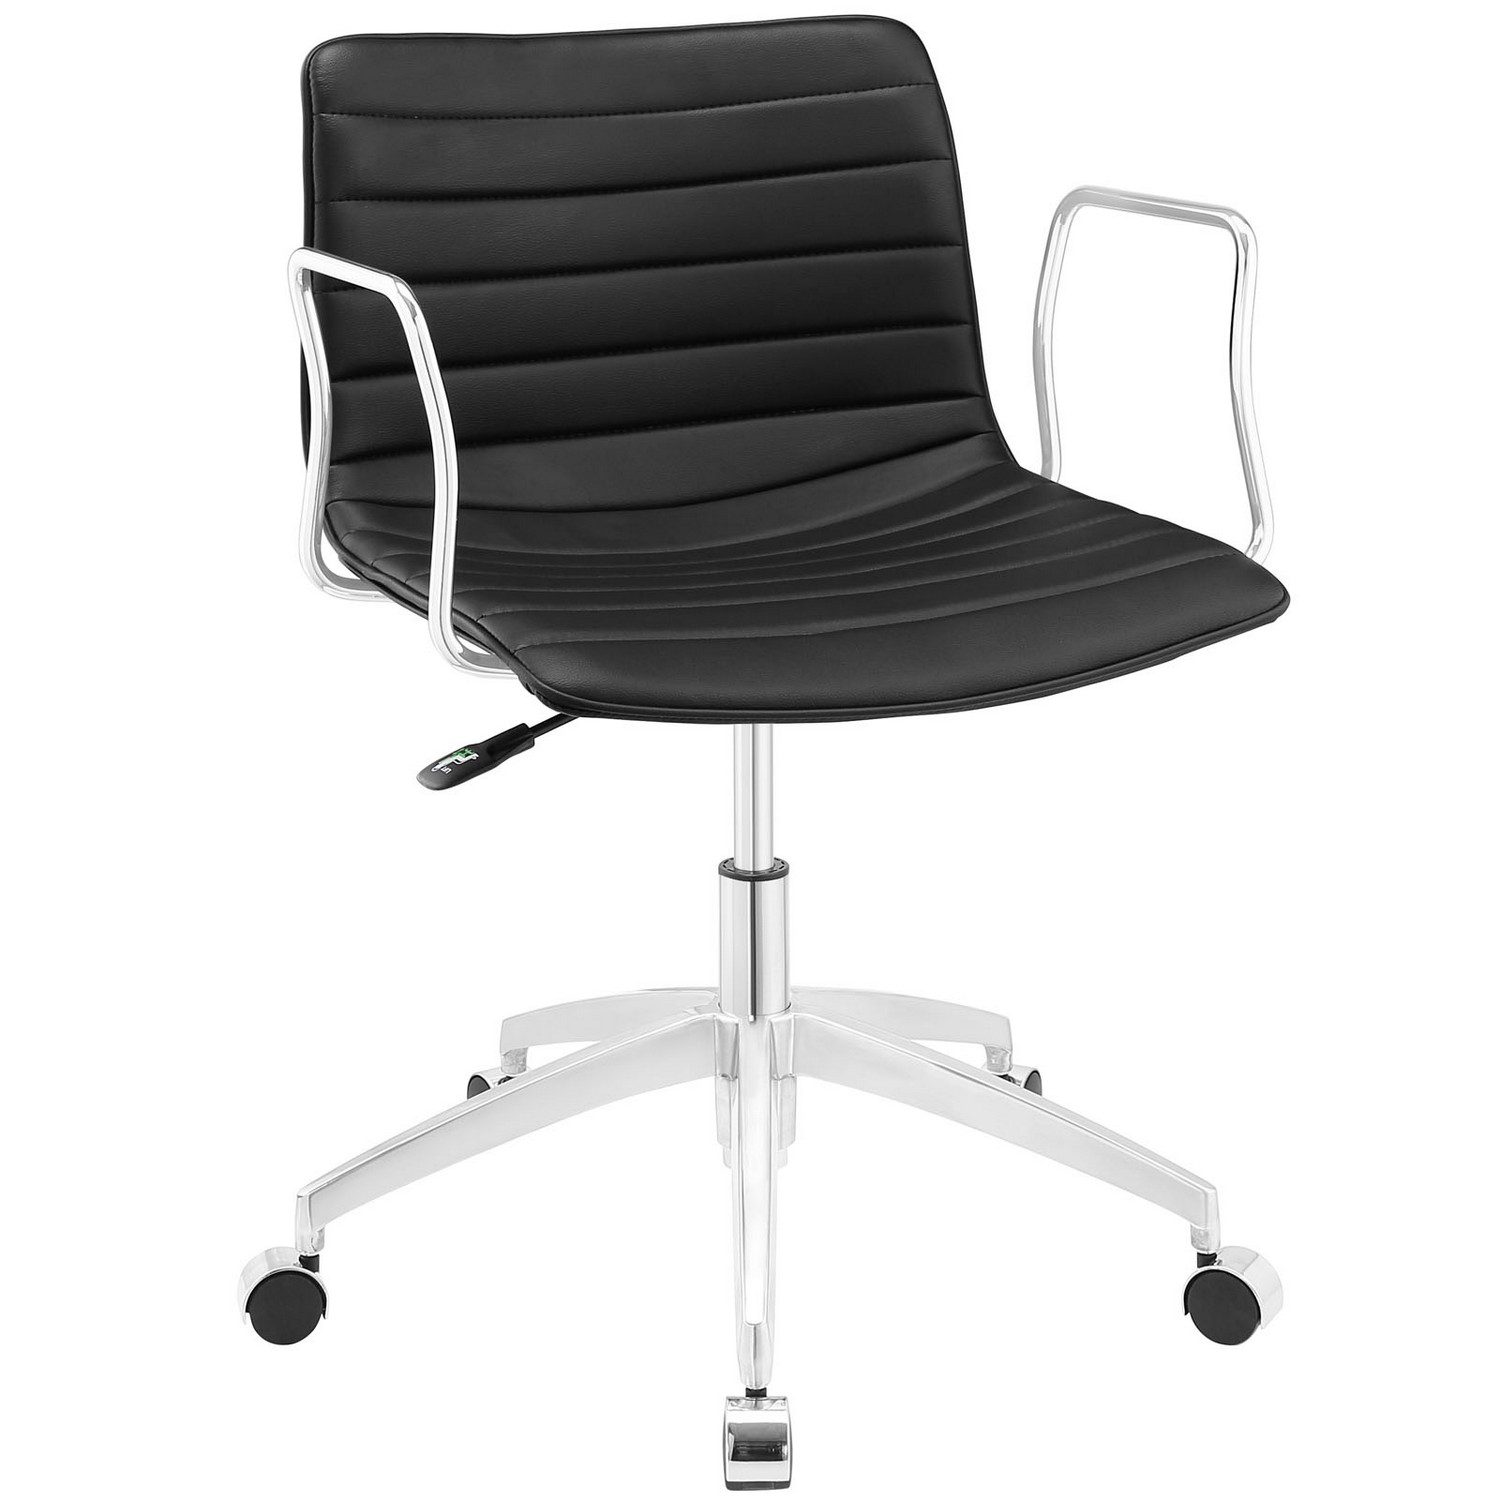 Modway Celerity Office Chair - Black